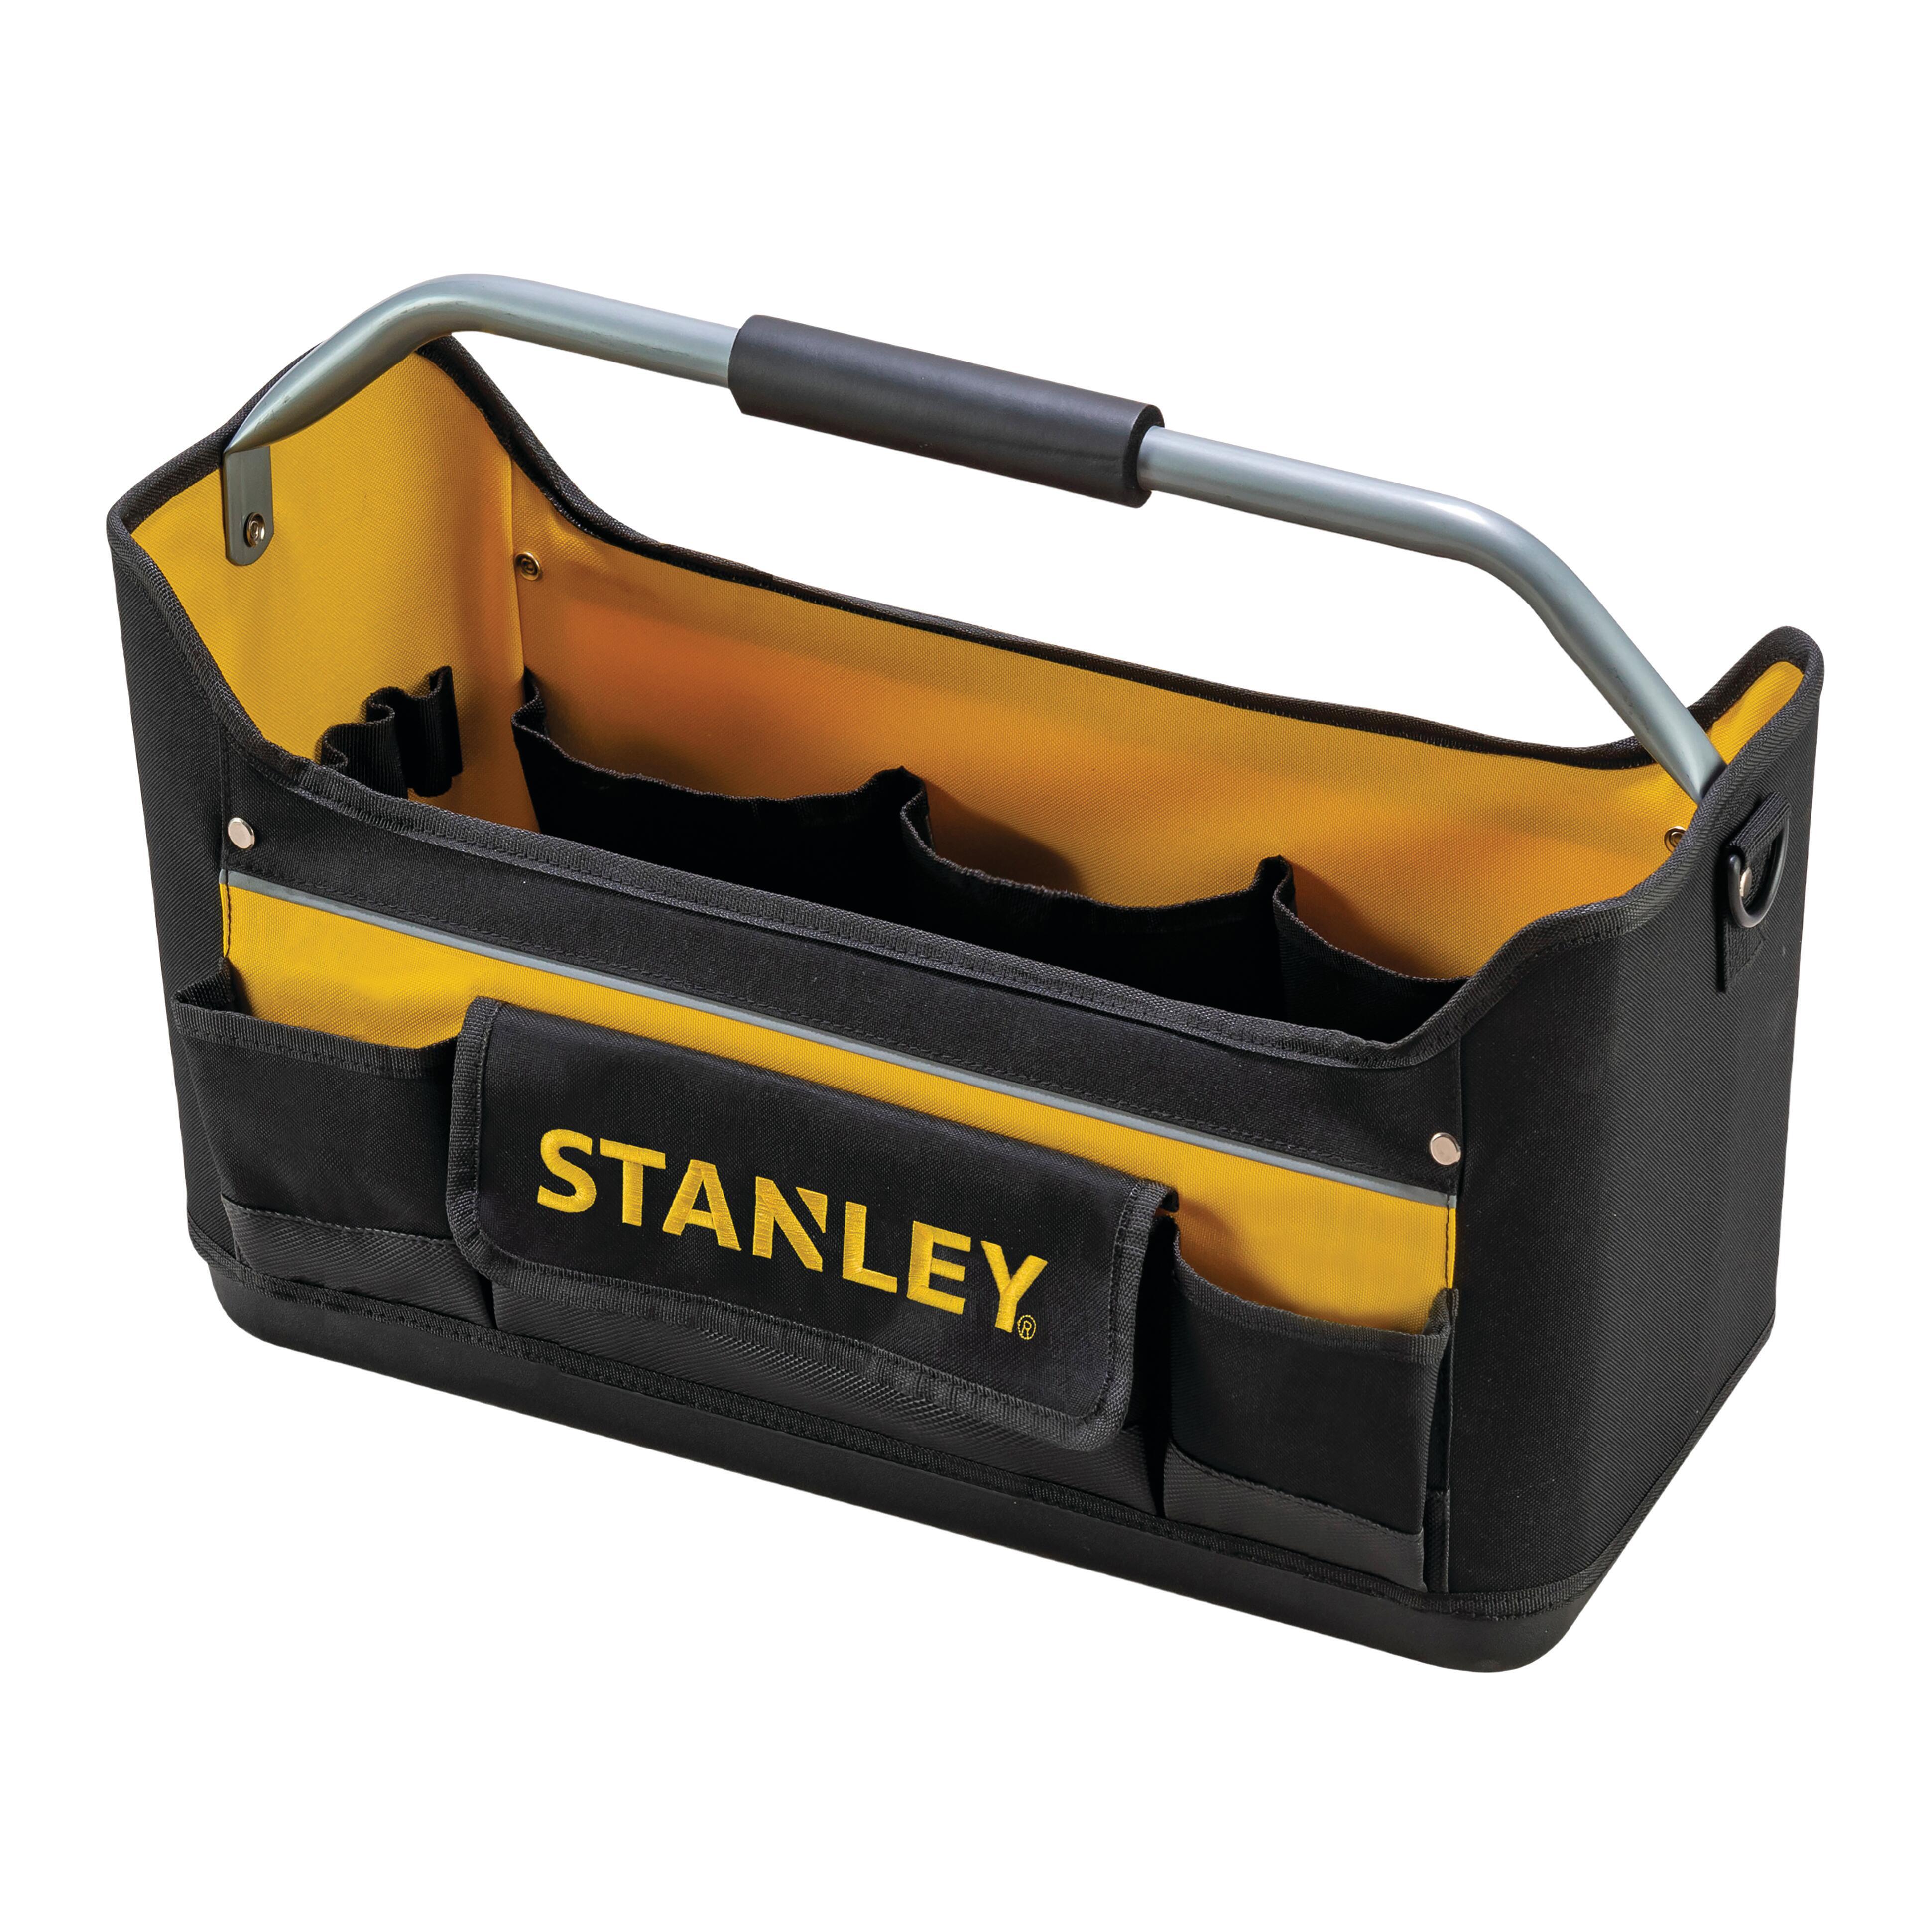 STANLEY cassetta portautensili attrezzi tool box 16" 39,4x22x16,2cm 1-79-216 